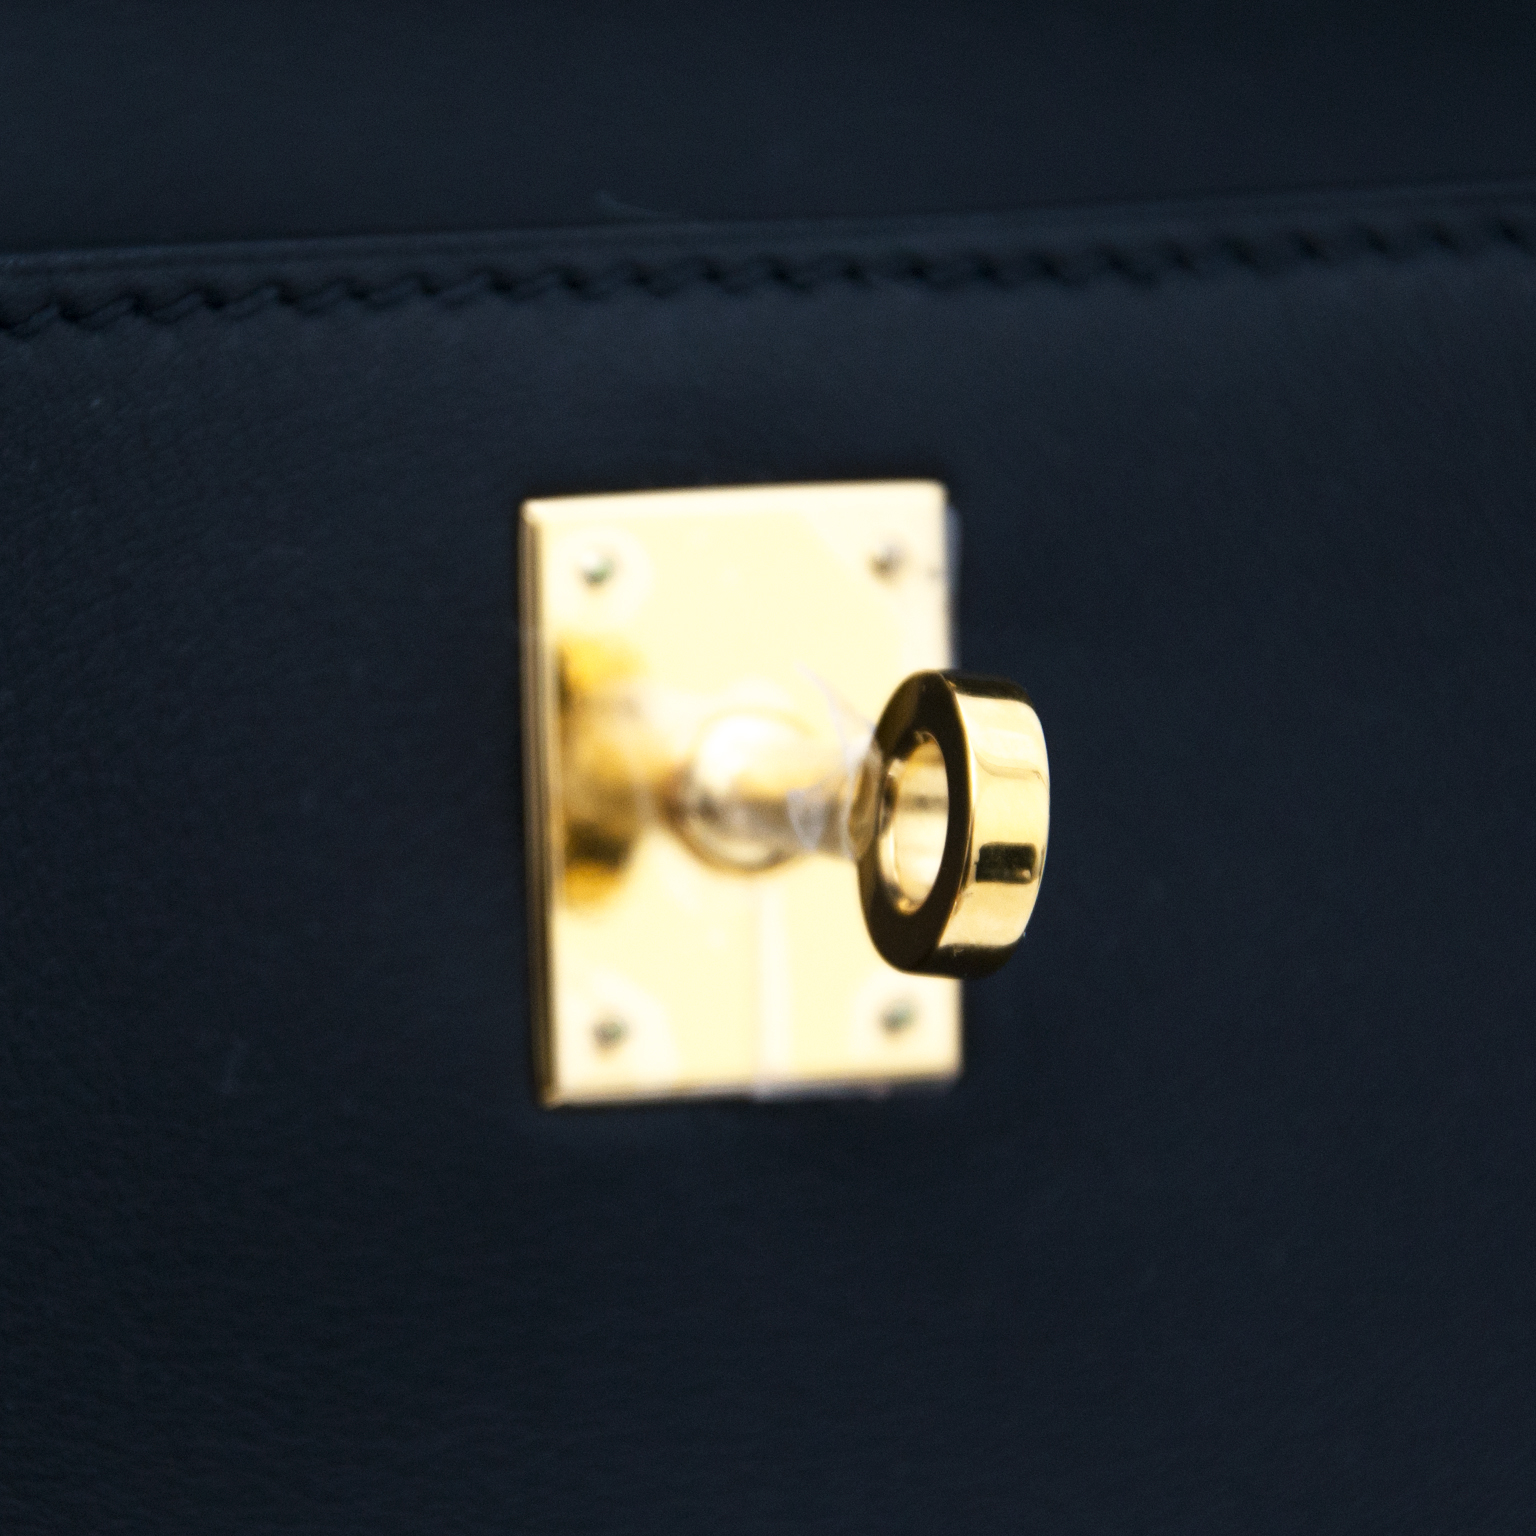 Koko免費分類廣告 - Hermes Mini Kelly Pochette So Black Item specifics    #100authentic #black #hermès #kelly #mini # pochette